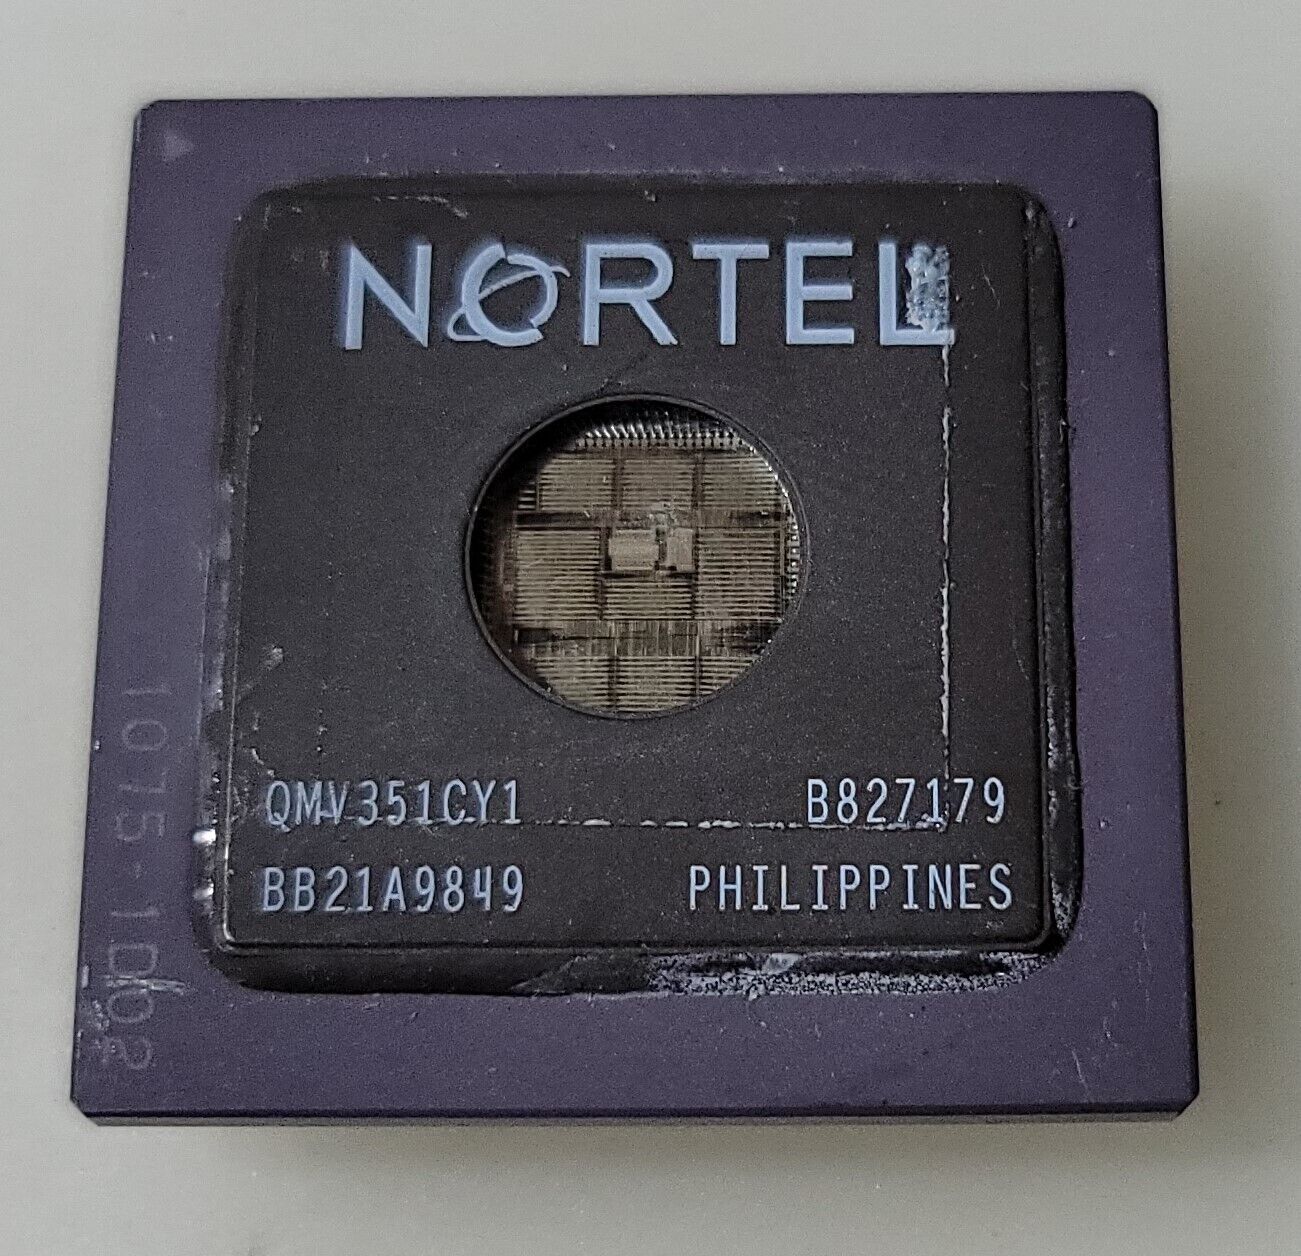 Vintage Rare Nortel QMV351CY1 Ceramic Processor For Collection/Gold